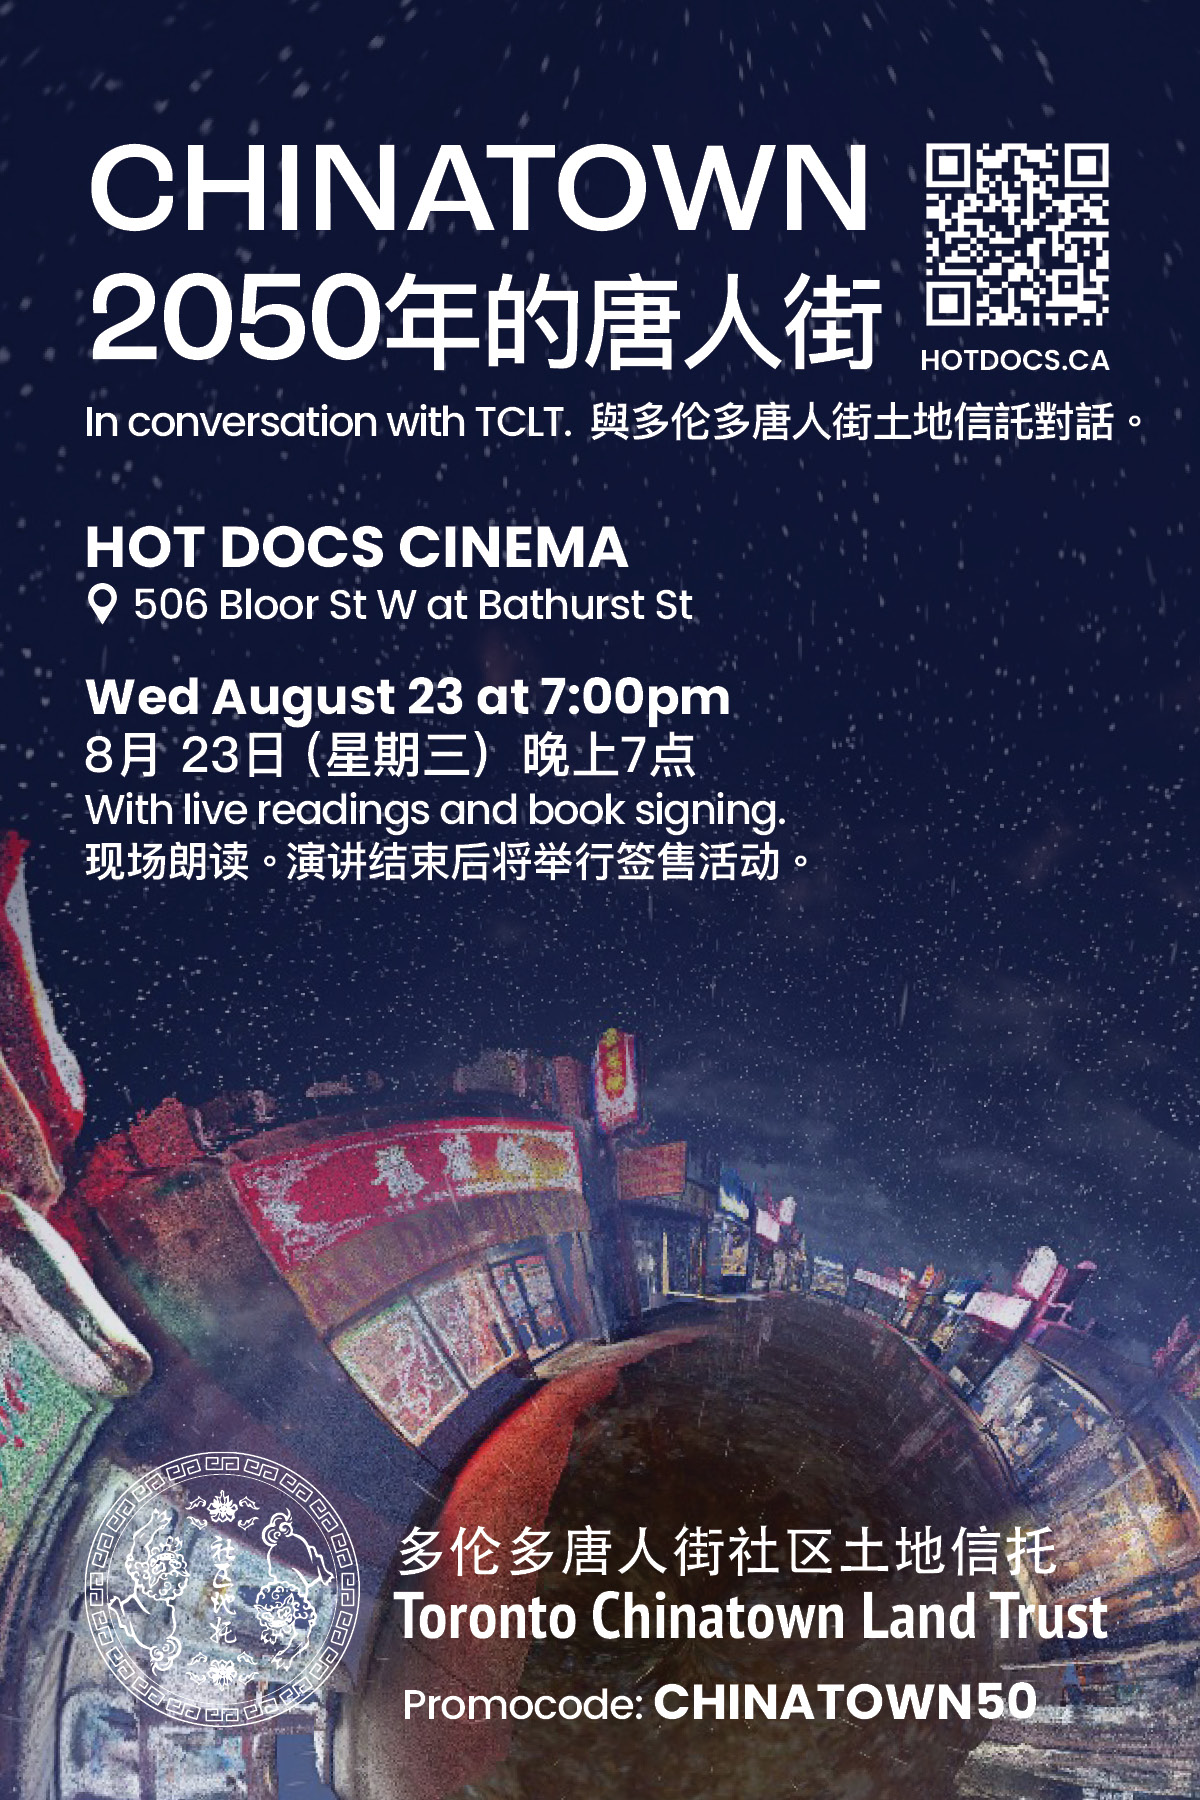 Chinatown 2050 Event FlyerFlyer designed by Christie Jia Wen Carrière @chris_jwc